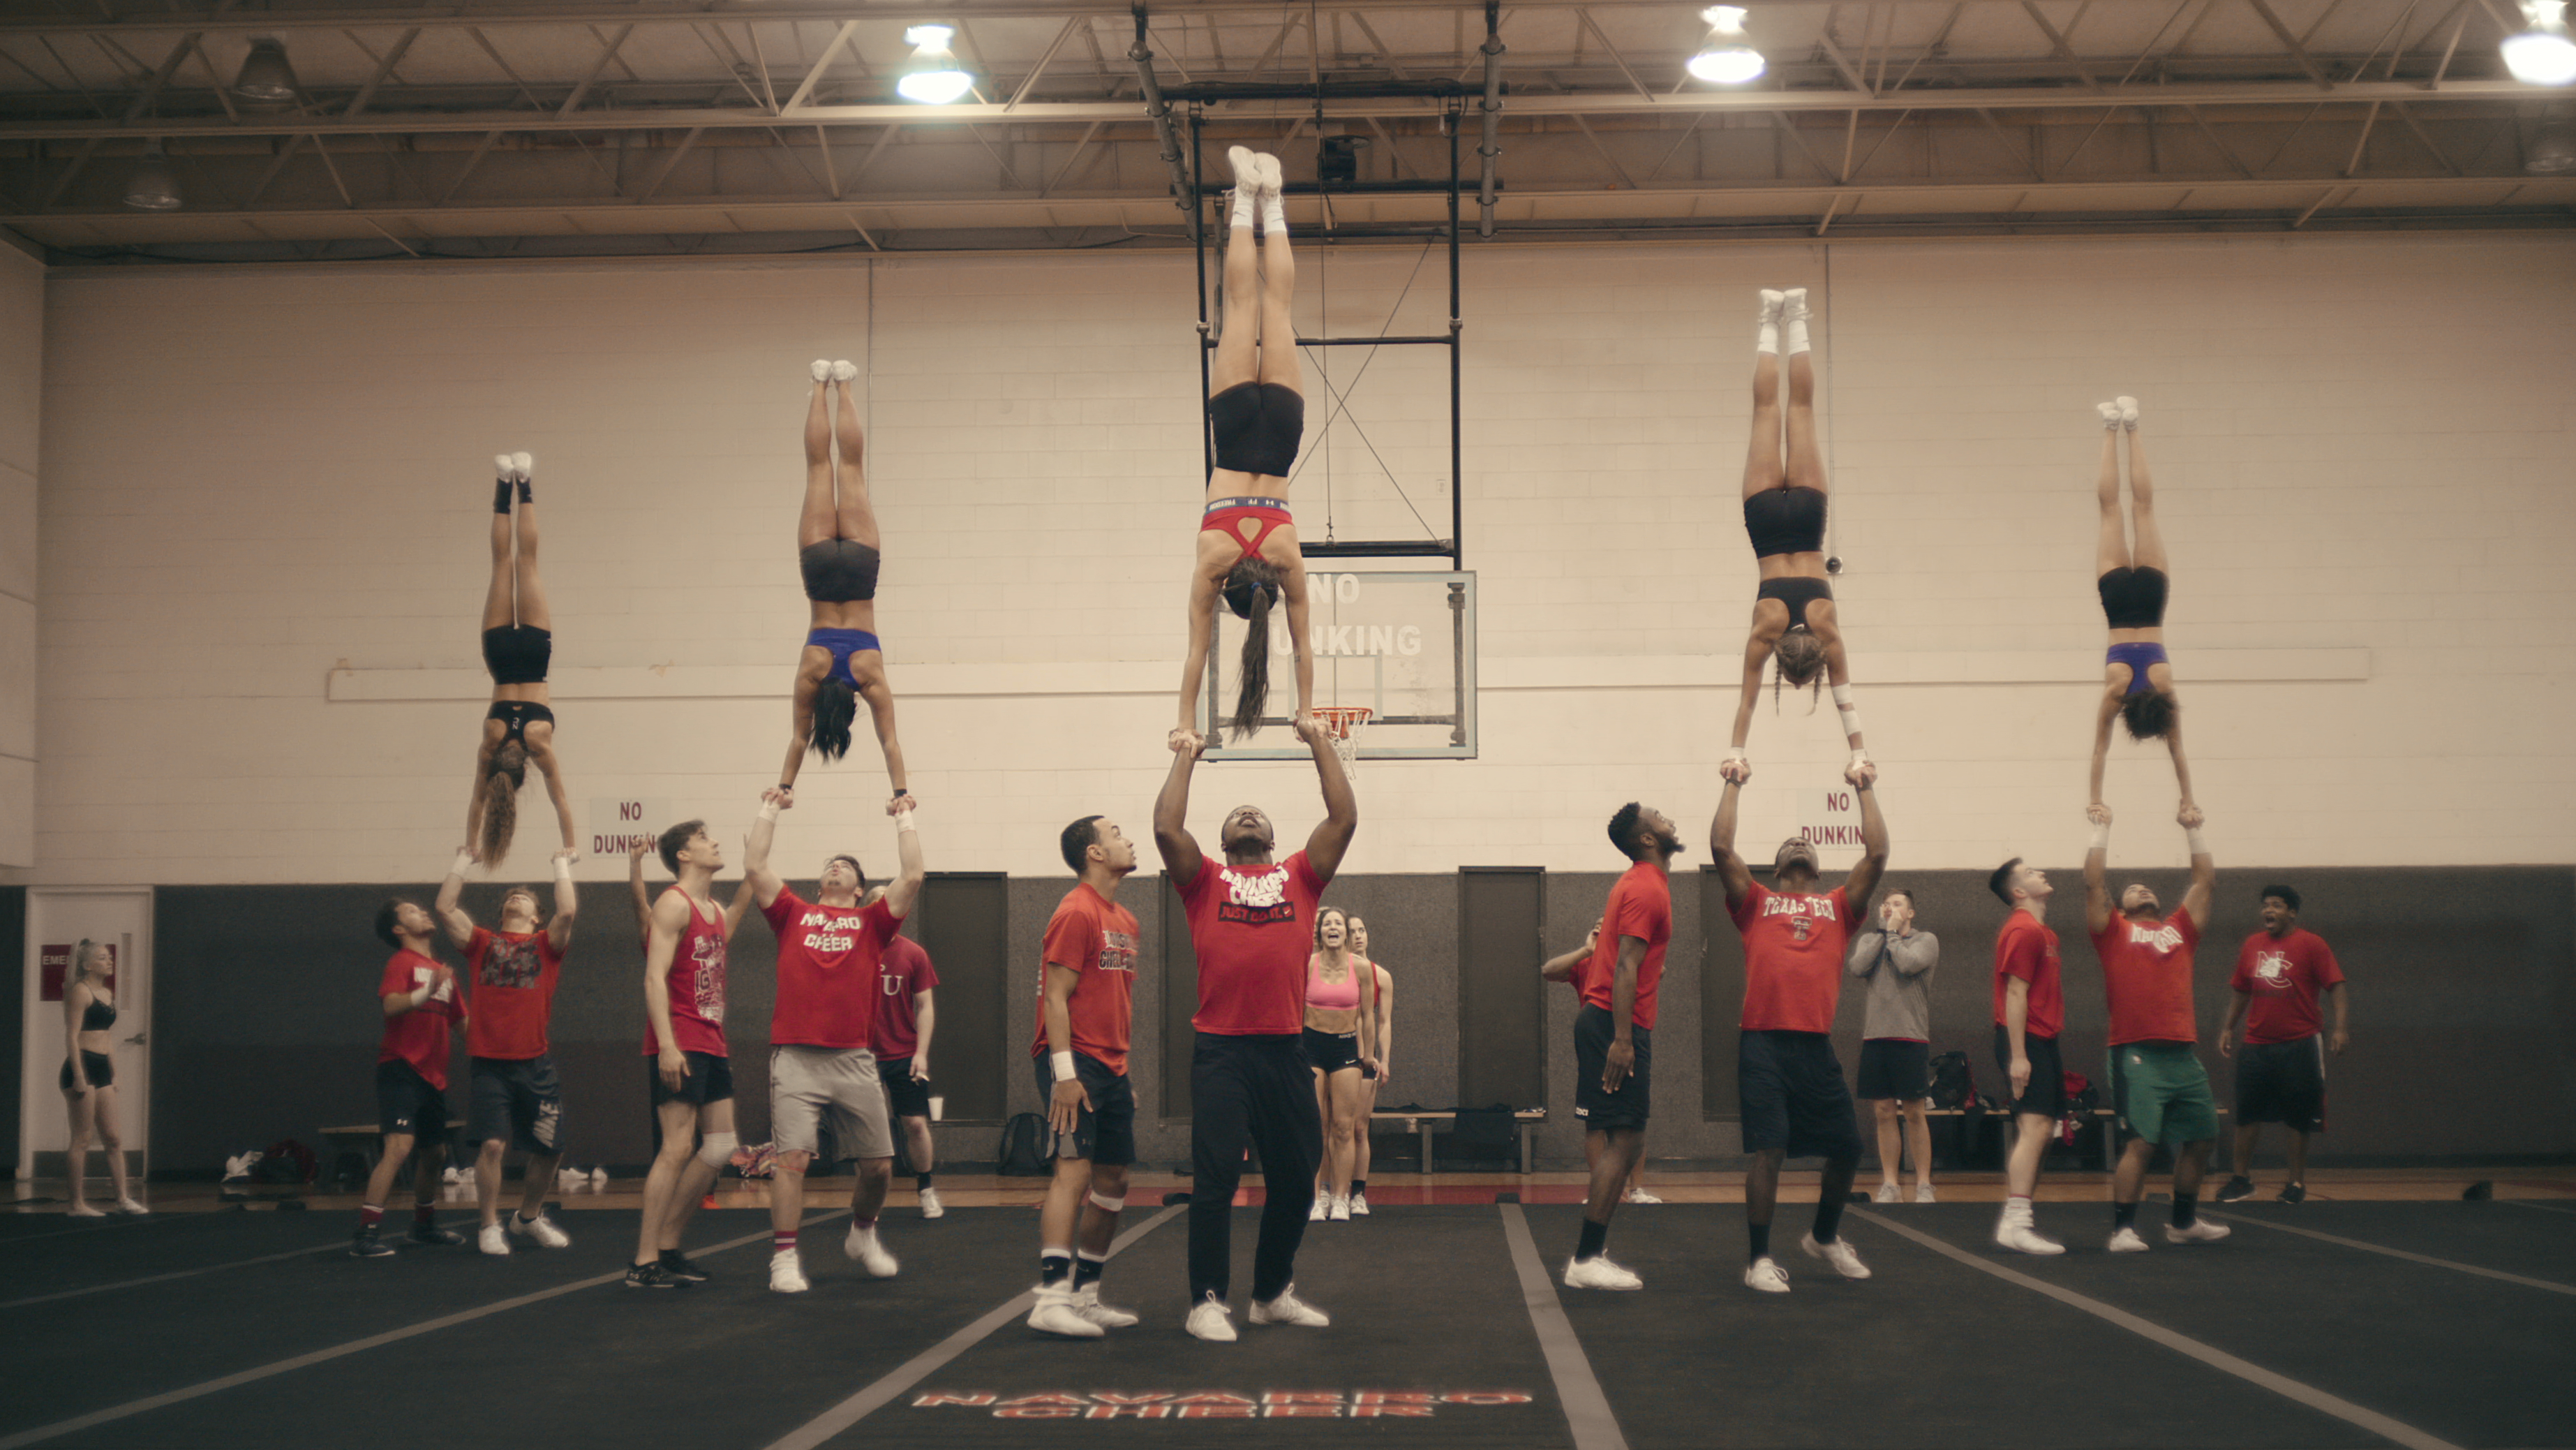 The Navarro cheerleaders practice their routine in the docuseries 'Cheer.' (Courtesy of Netflix)